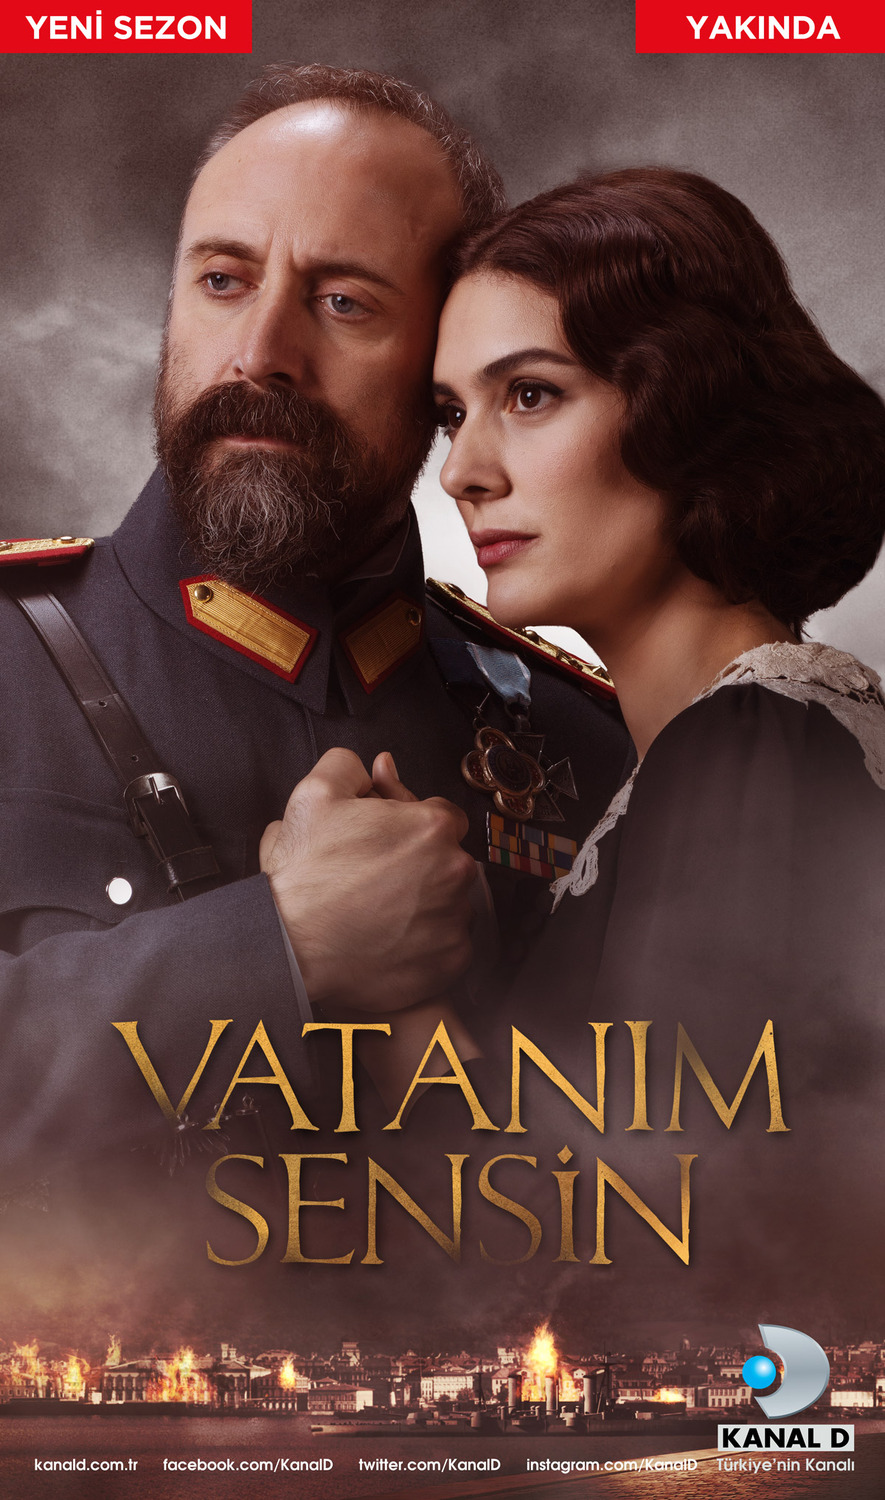 Extra Large TV Poster Image for Vatanim Sensin (#2 of 3)